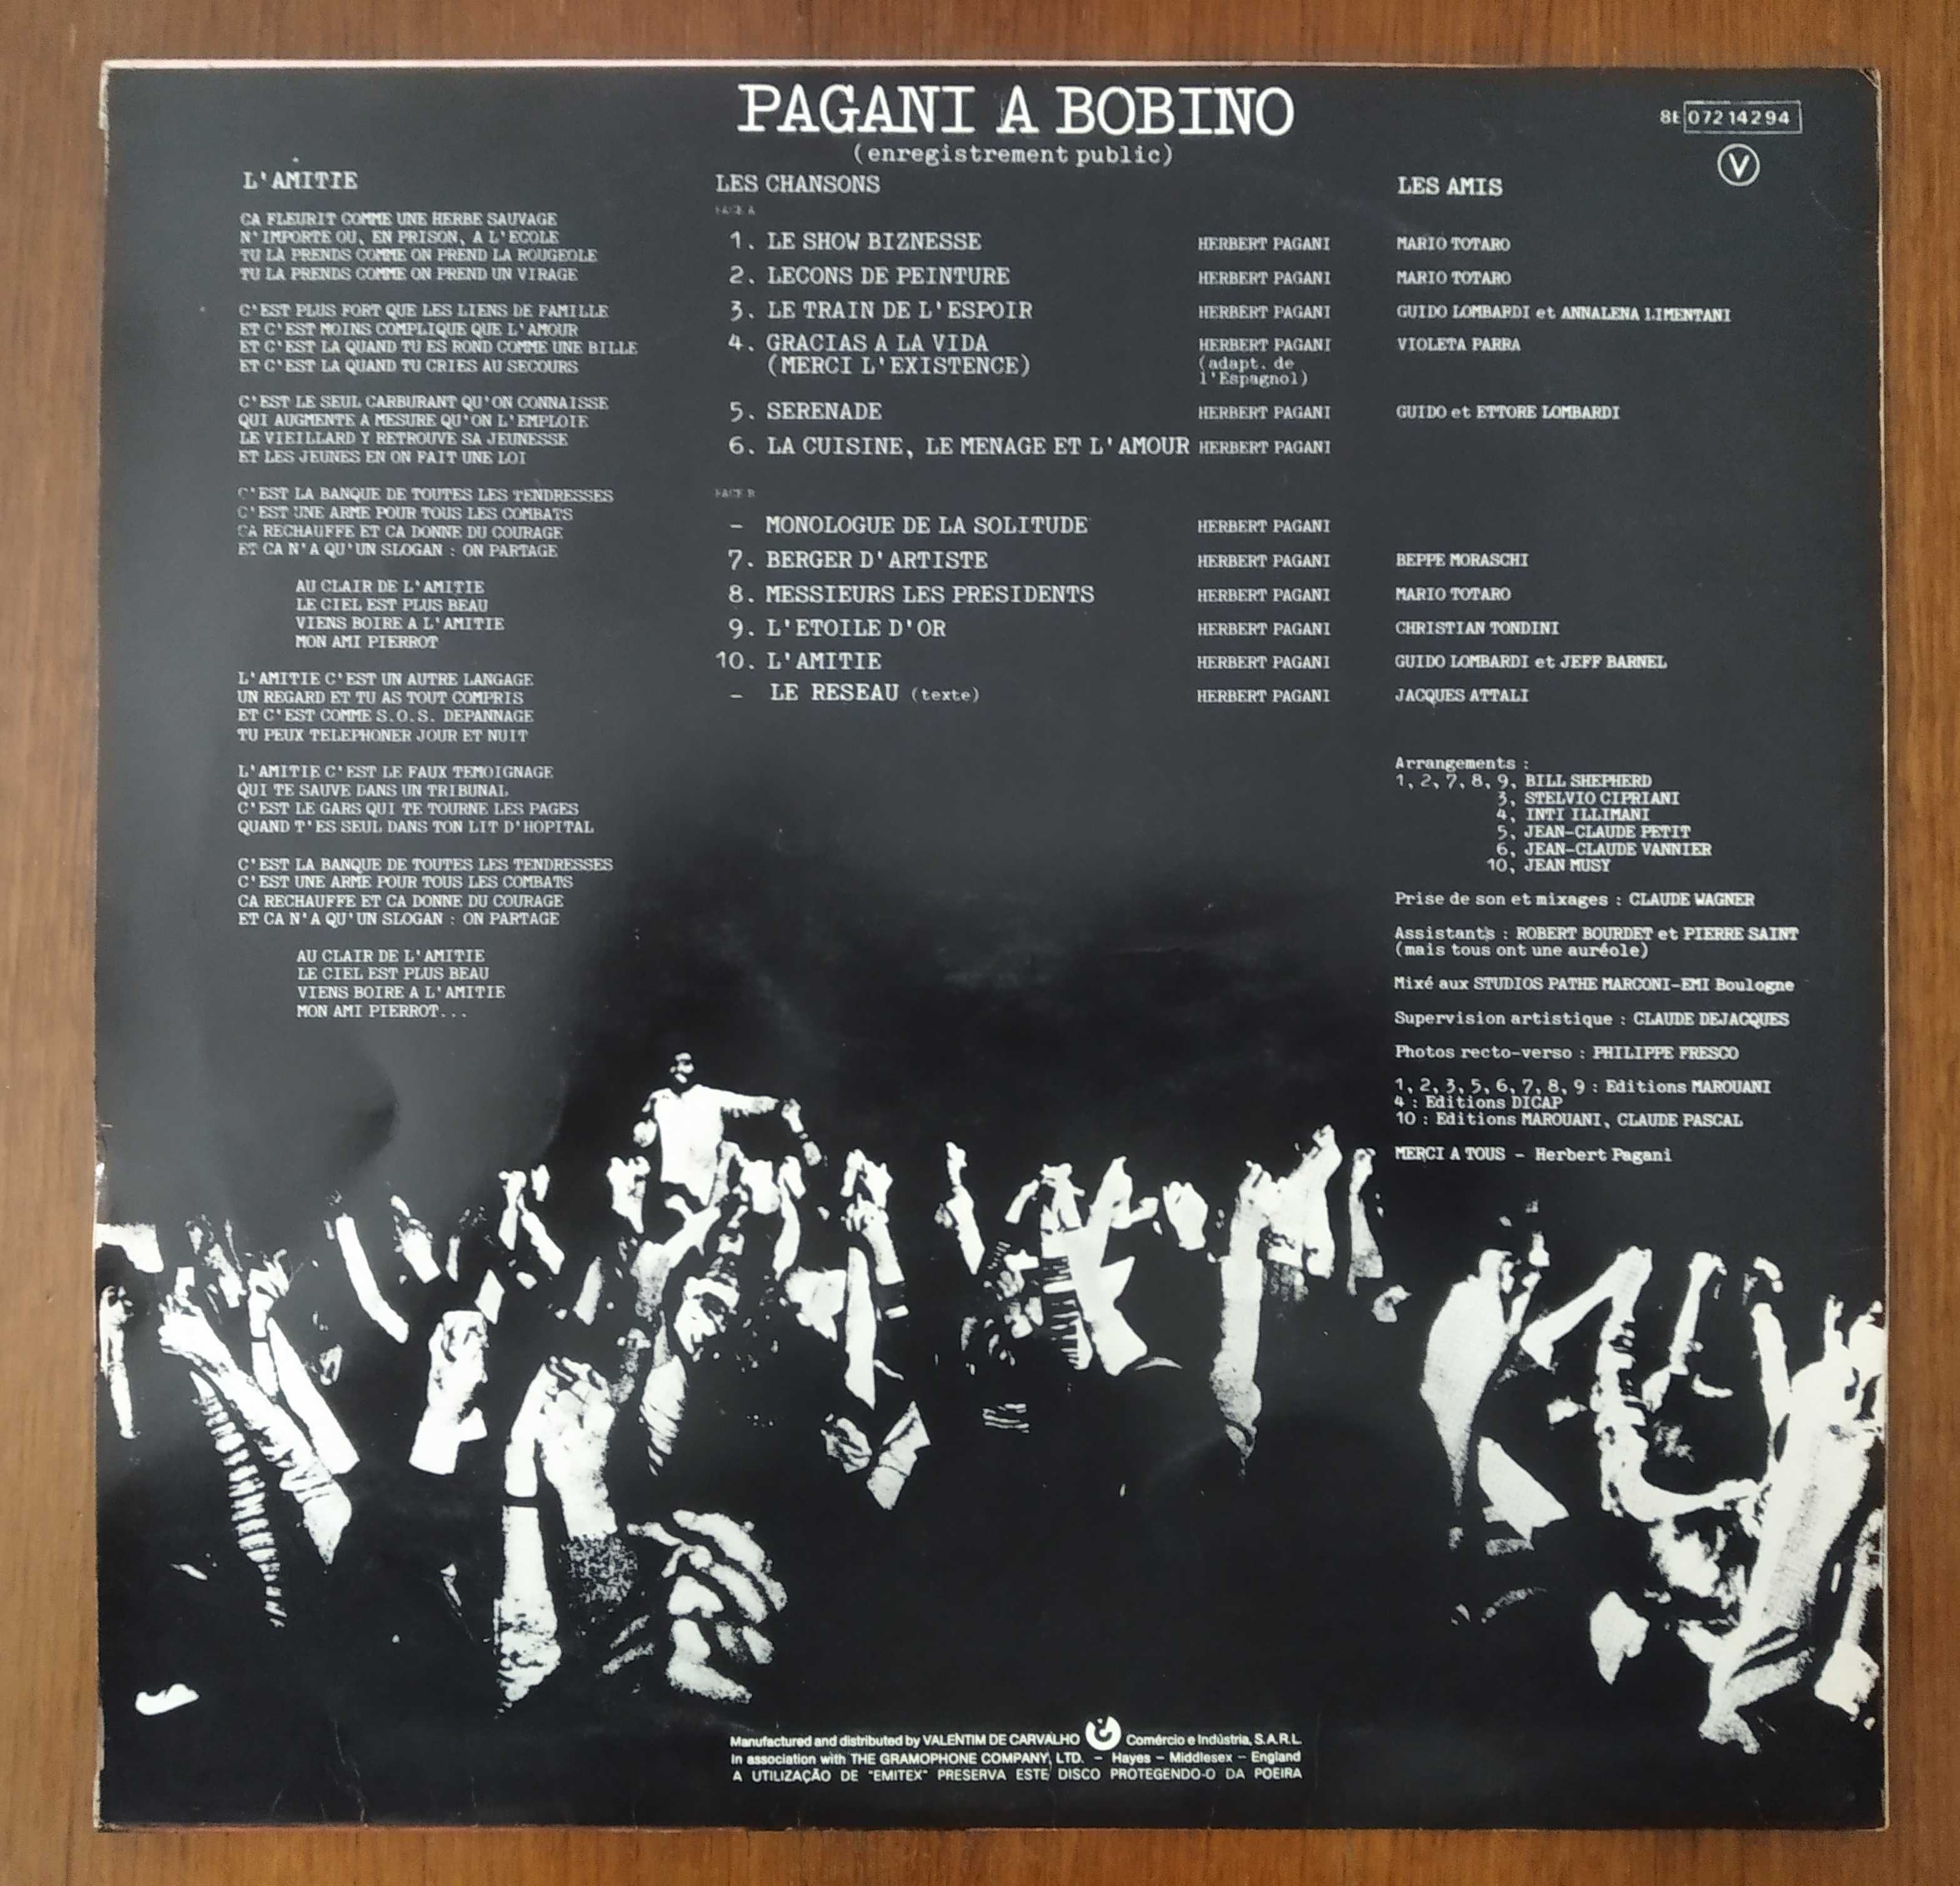 Herbet Pagani disco de vinil "Pagani a Bobino".